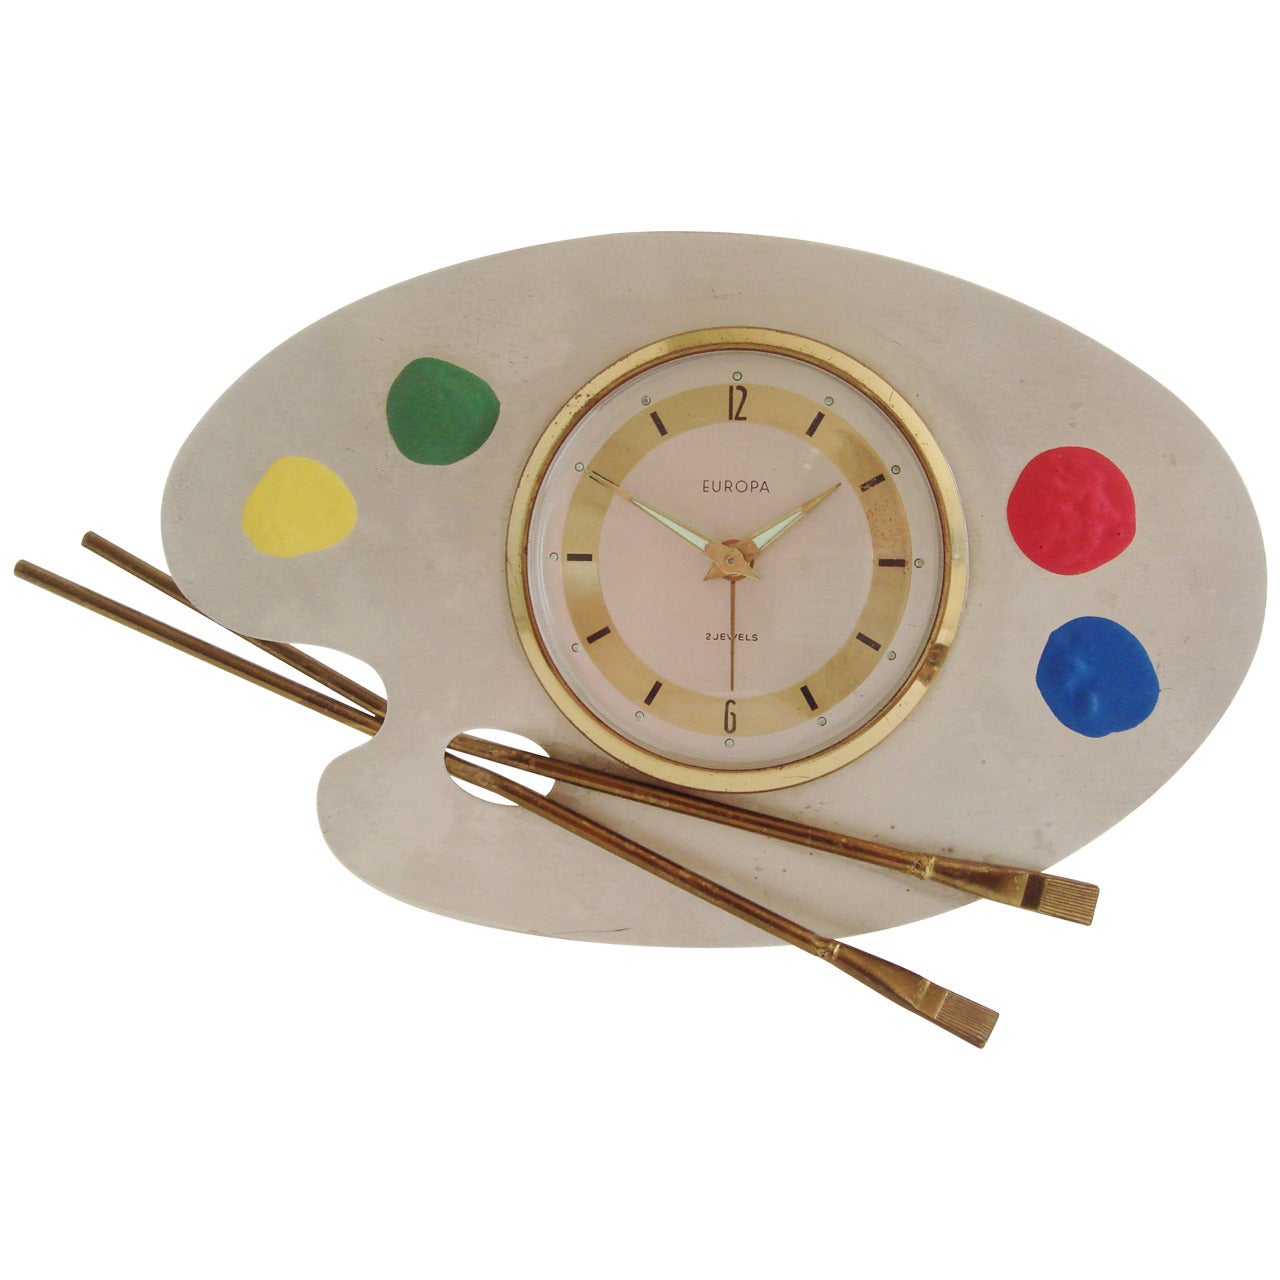 German Post-War Figural "Artist's Palette" Alarm Clock by Europa